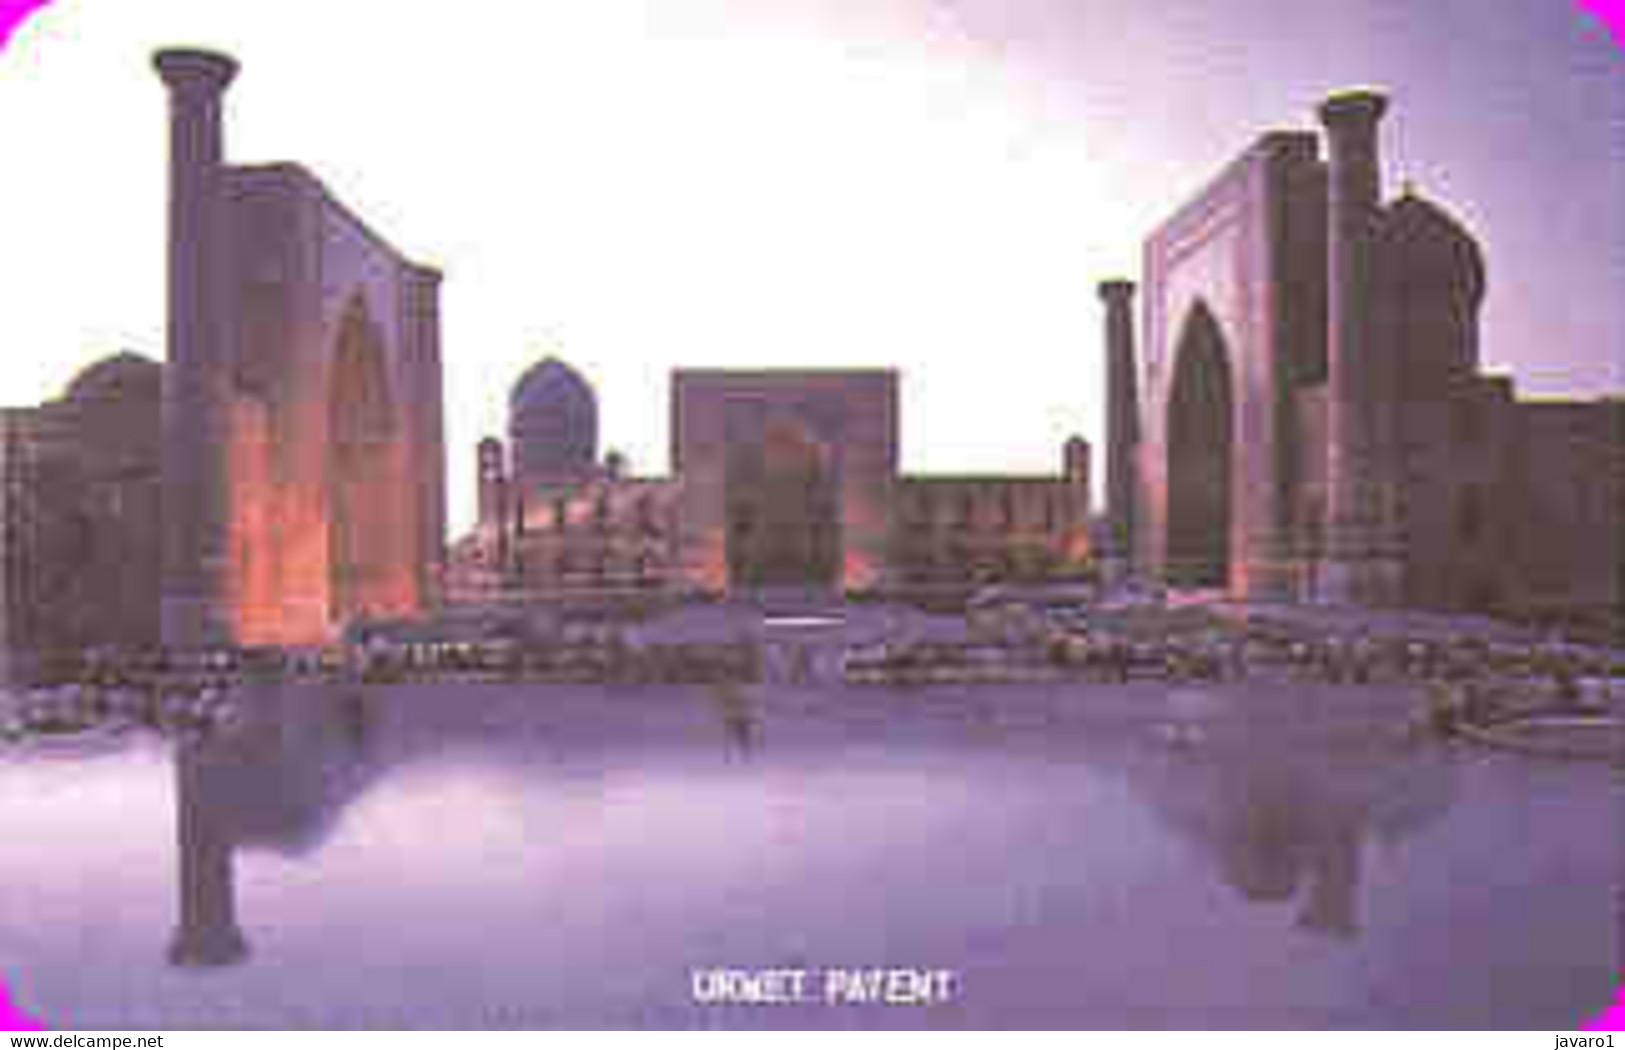 UZBEKISTAN : UZBMU1 25u Mosques And 3 Gates (10mm Magn.strip) MINT - Uzbekistan